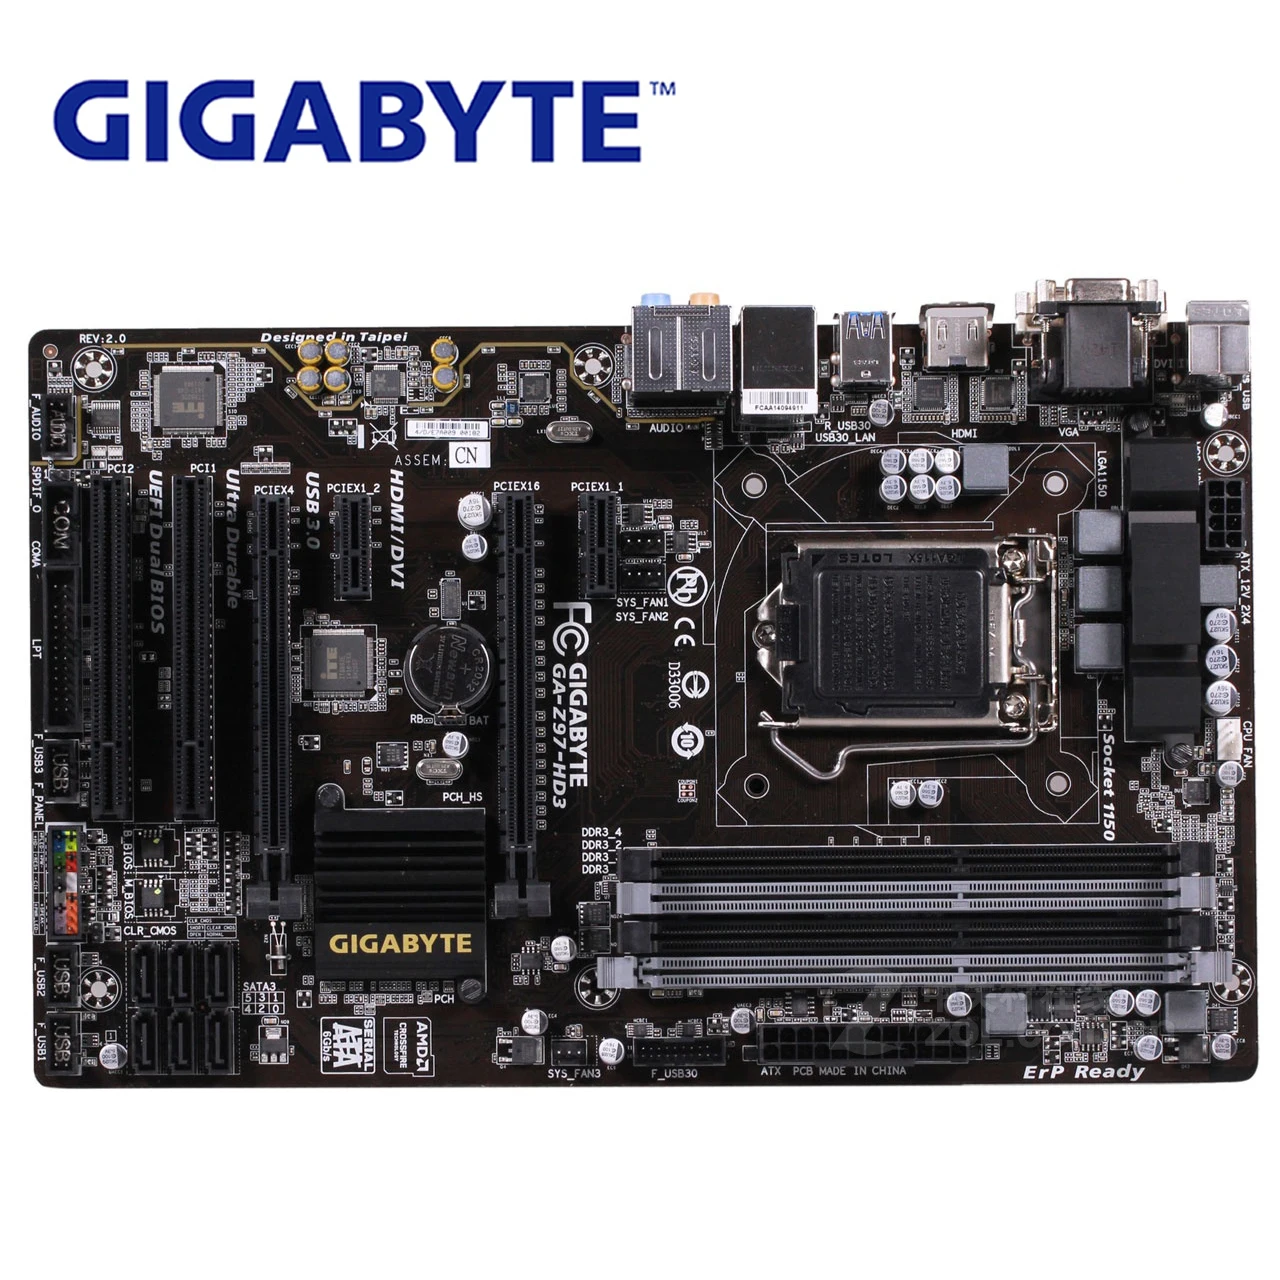 LGA1150 DDR3 Z97 Gigabyte GA-Z97-HD3 оригинальная материнская плата USB3.0 32G Z97-HD3 настольная материнская плата SATA III